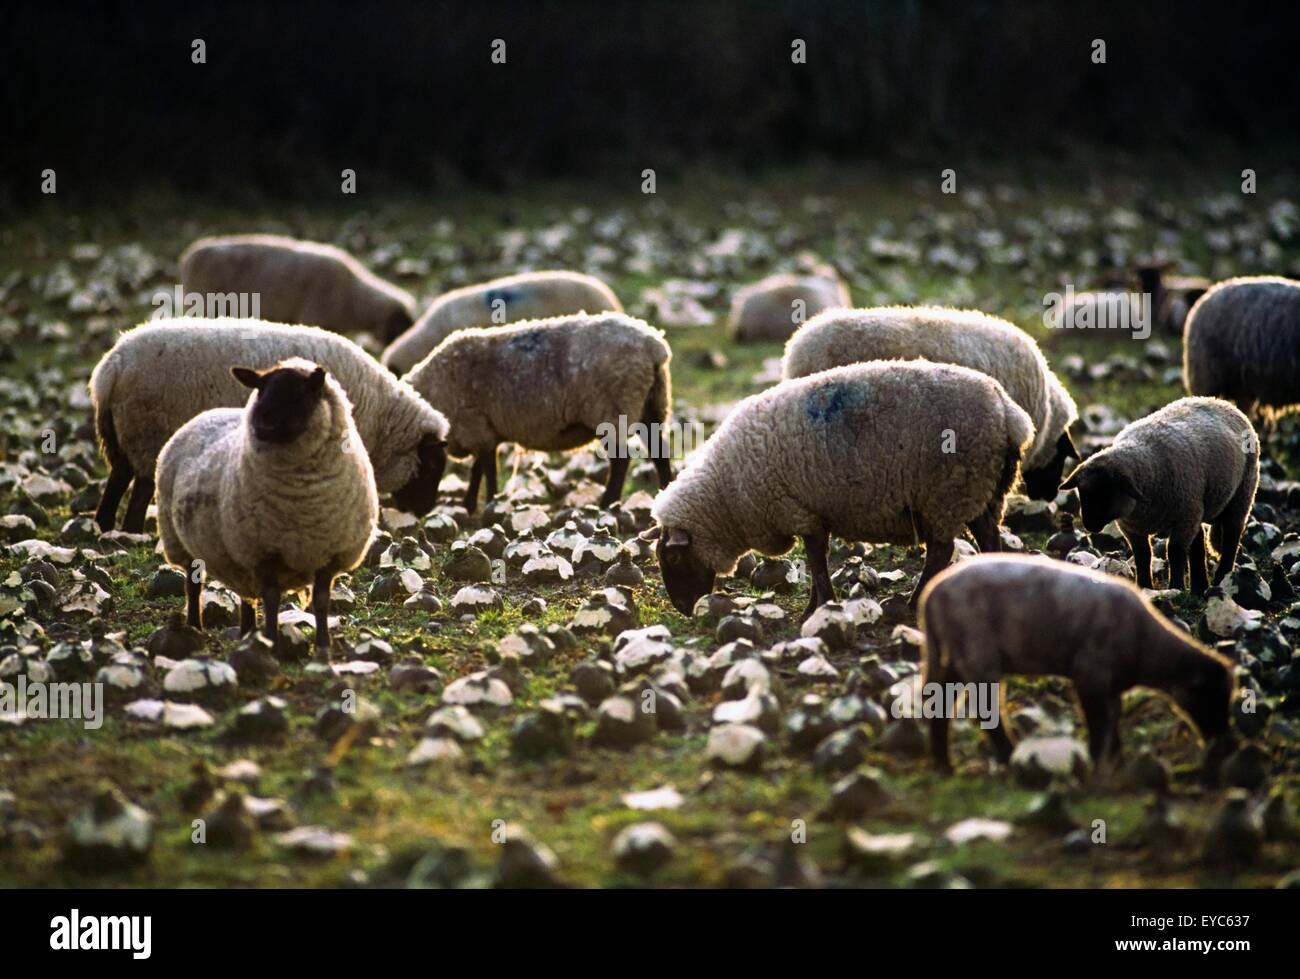 Alimentación de nabos de oveja fotografías e imágenes de alta resolución -  Alamy